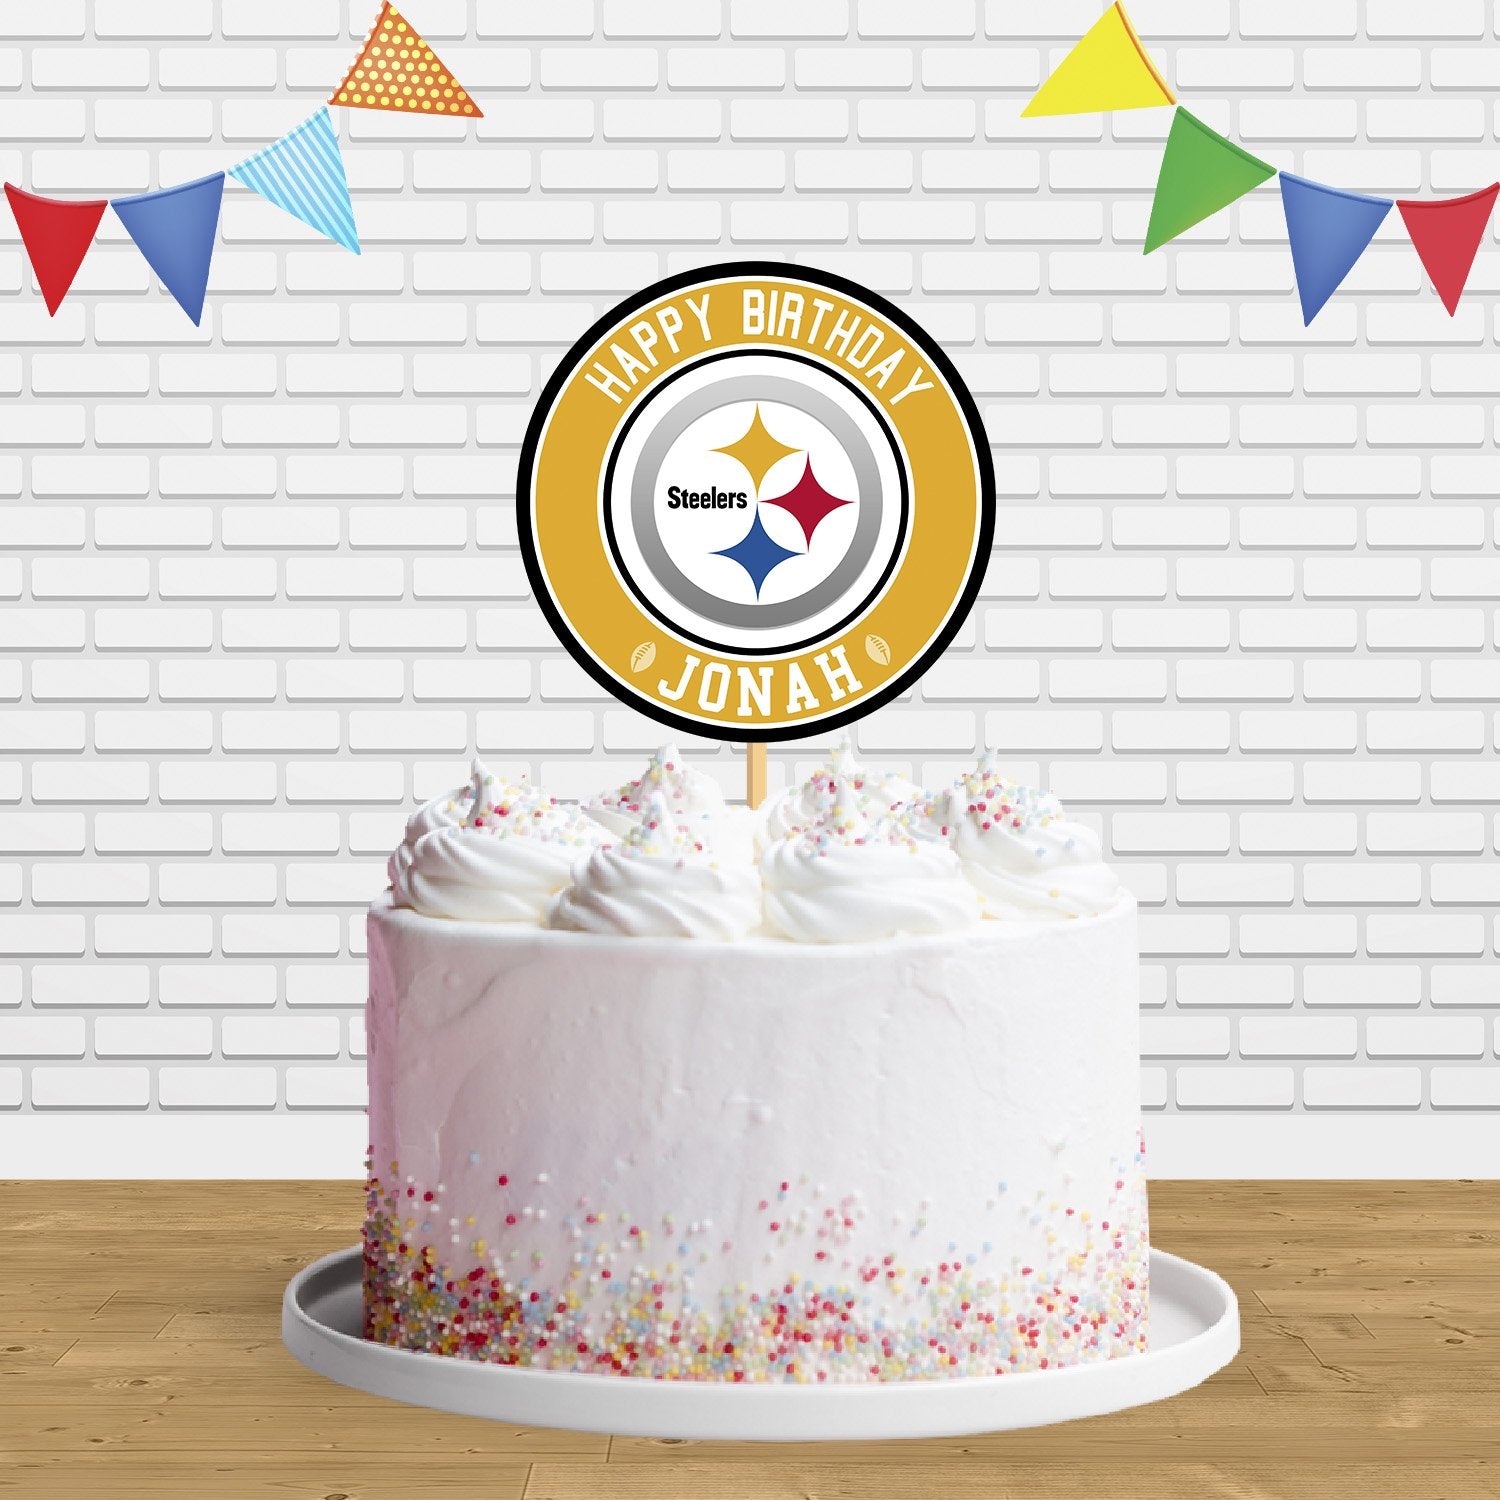 Making Pittsburgh Steelers birthday cake - YouTube